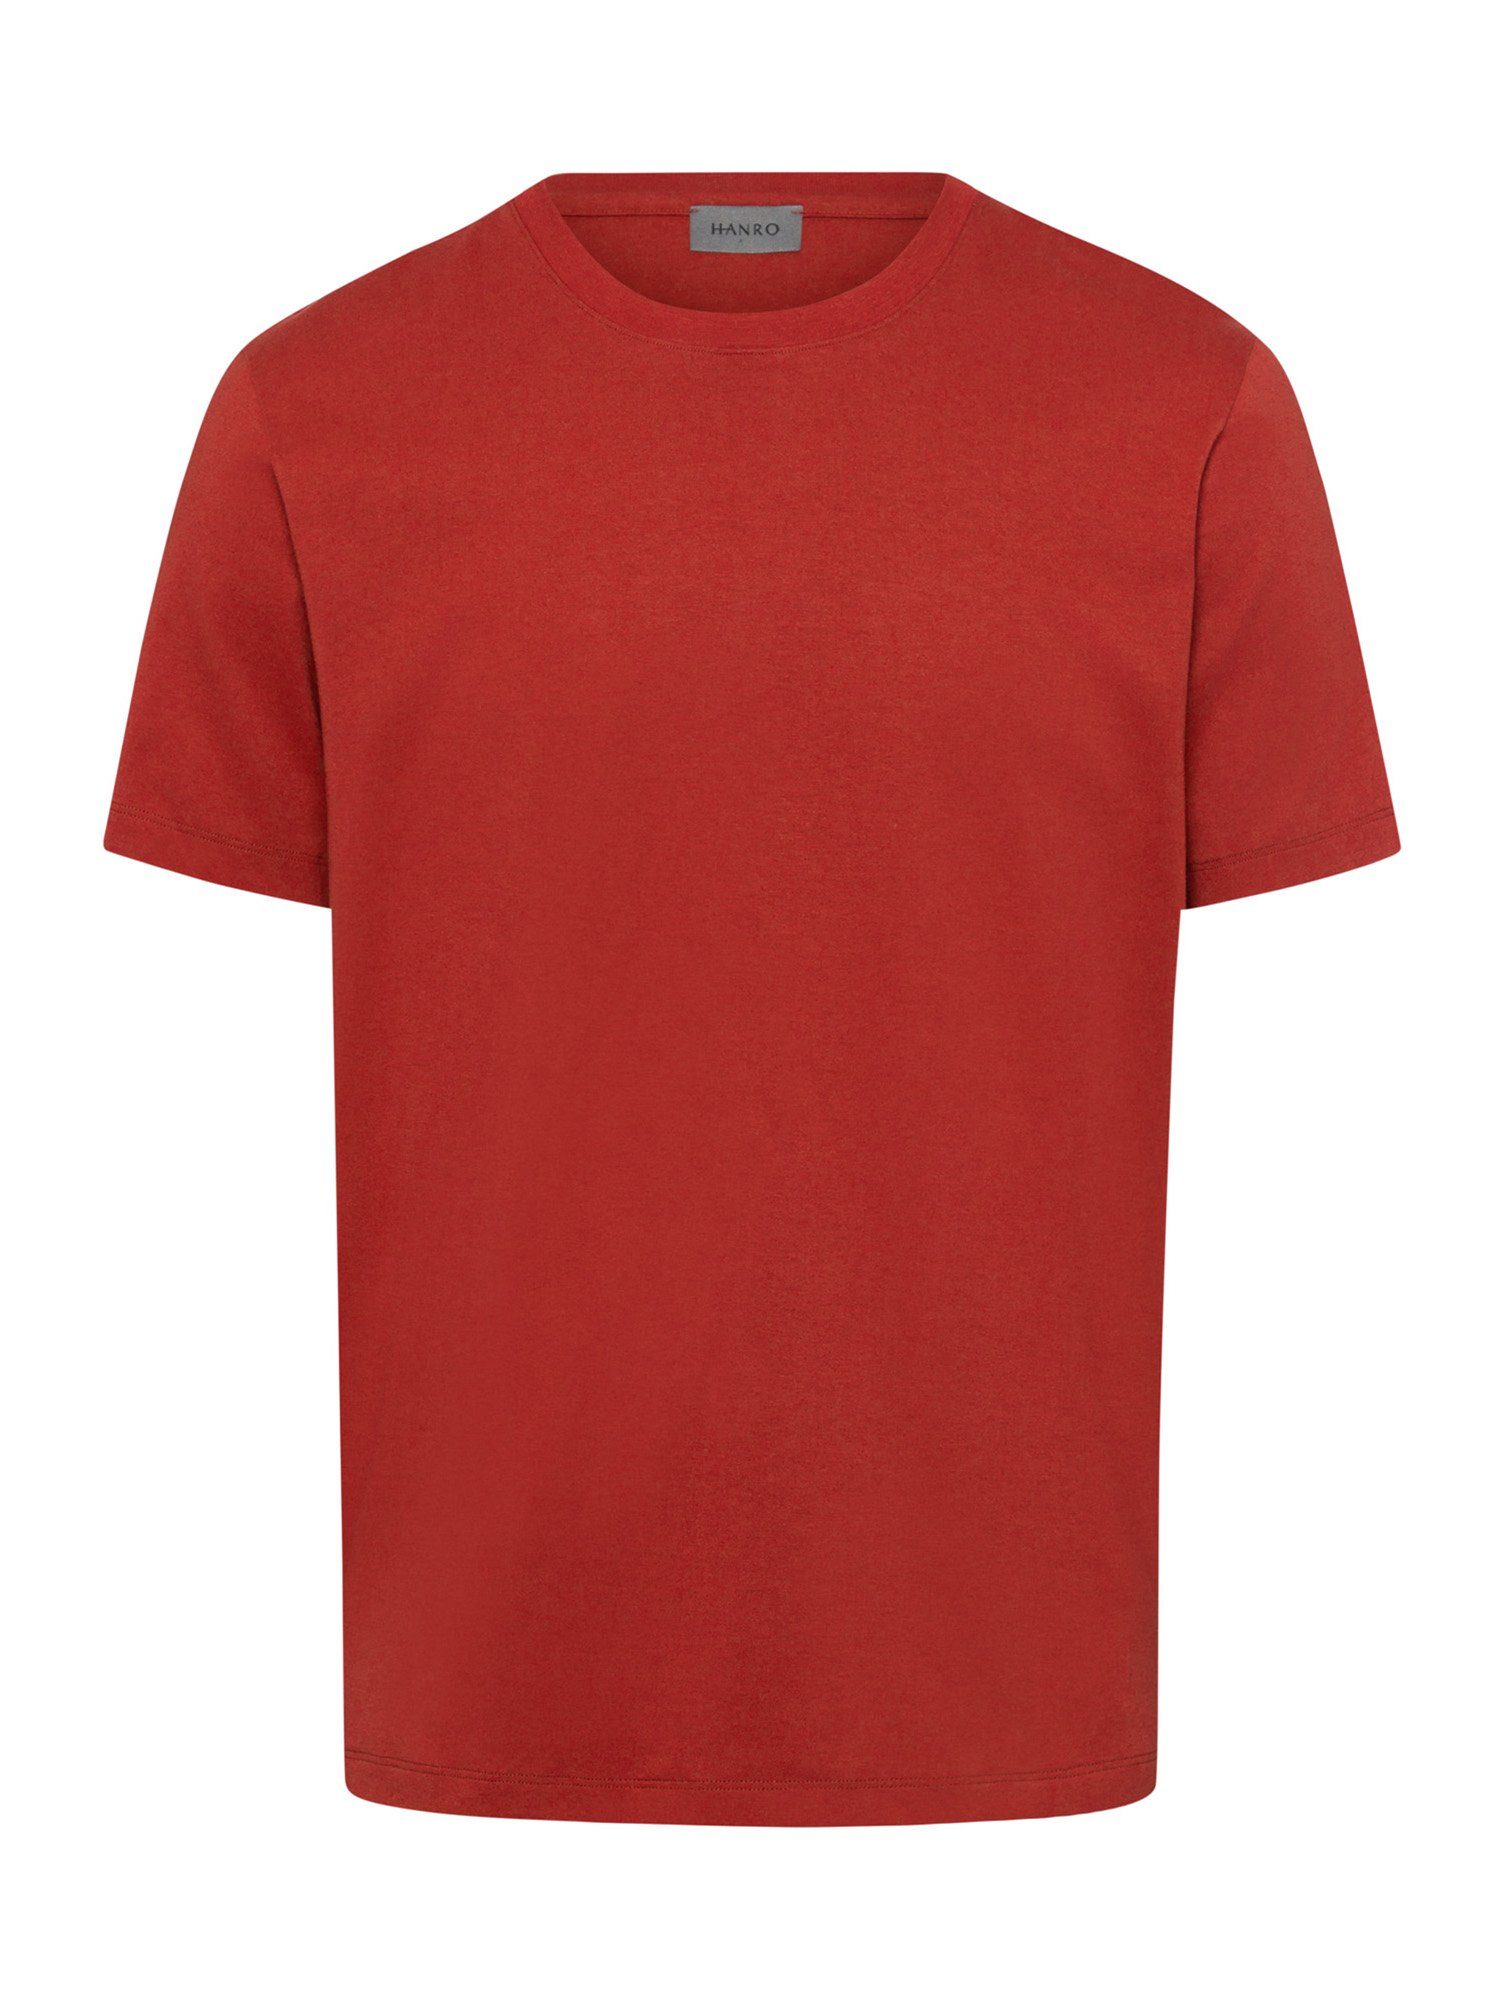 Hanro T-Shirt Living Shirts red ochre